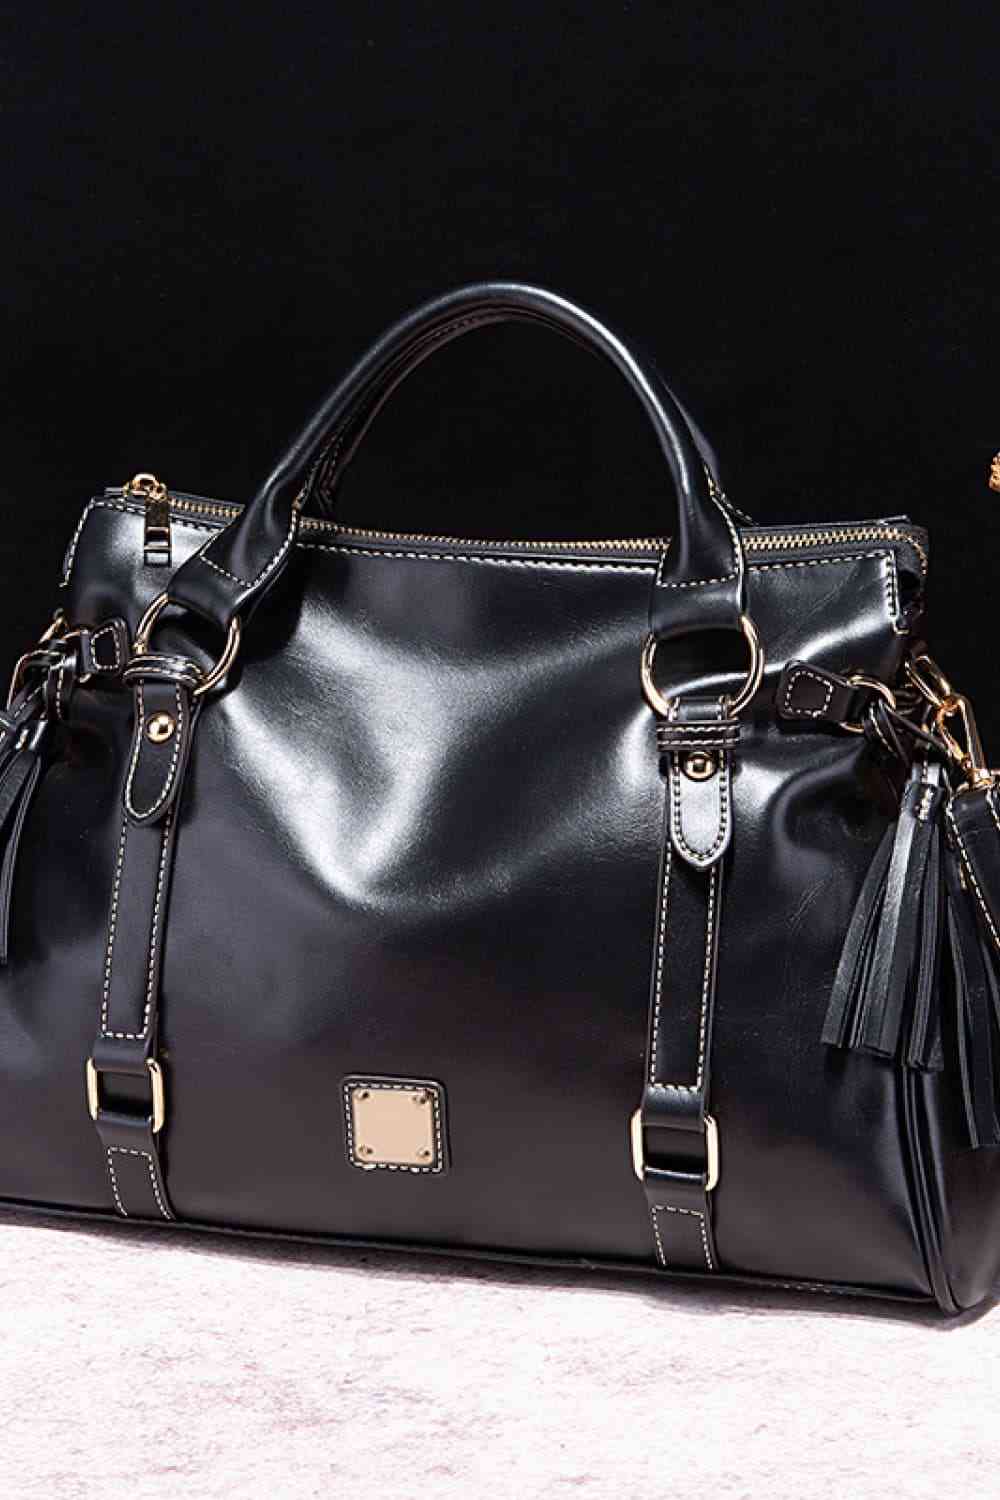 PU Leather Handbag with Tassels - Just Enuff Sexy